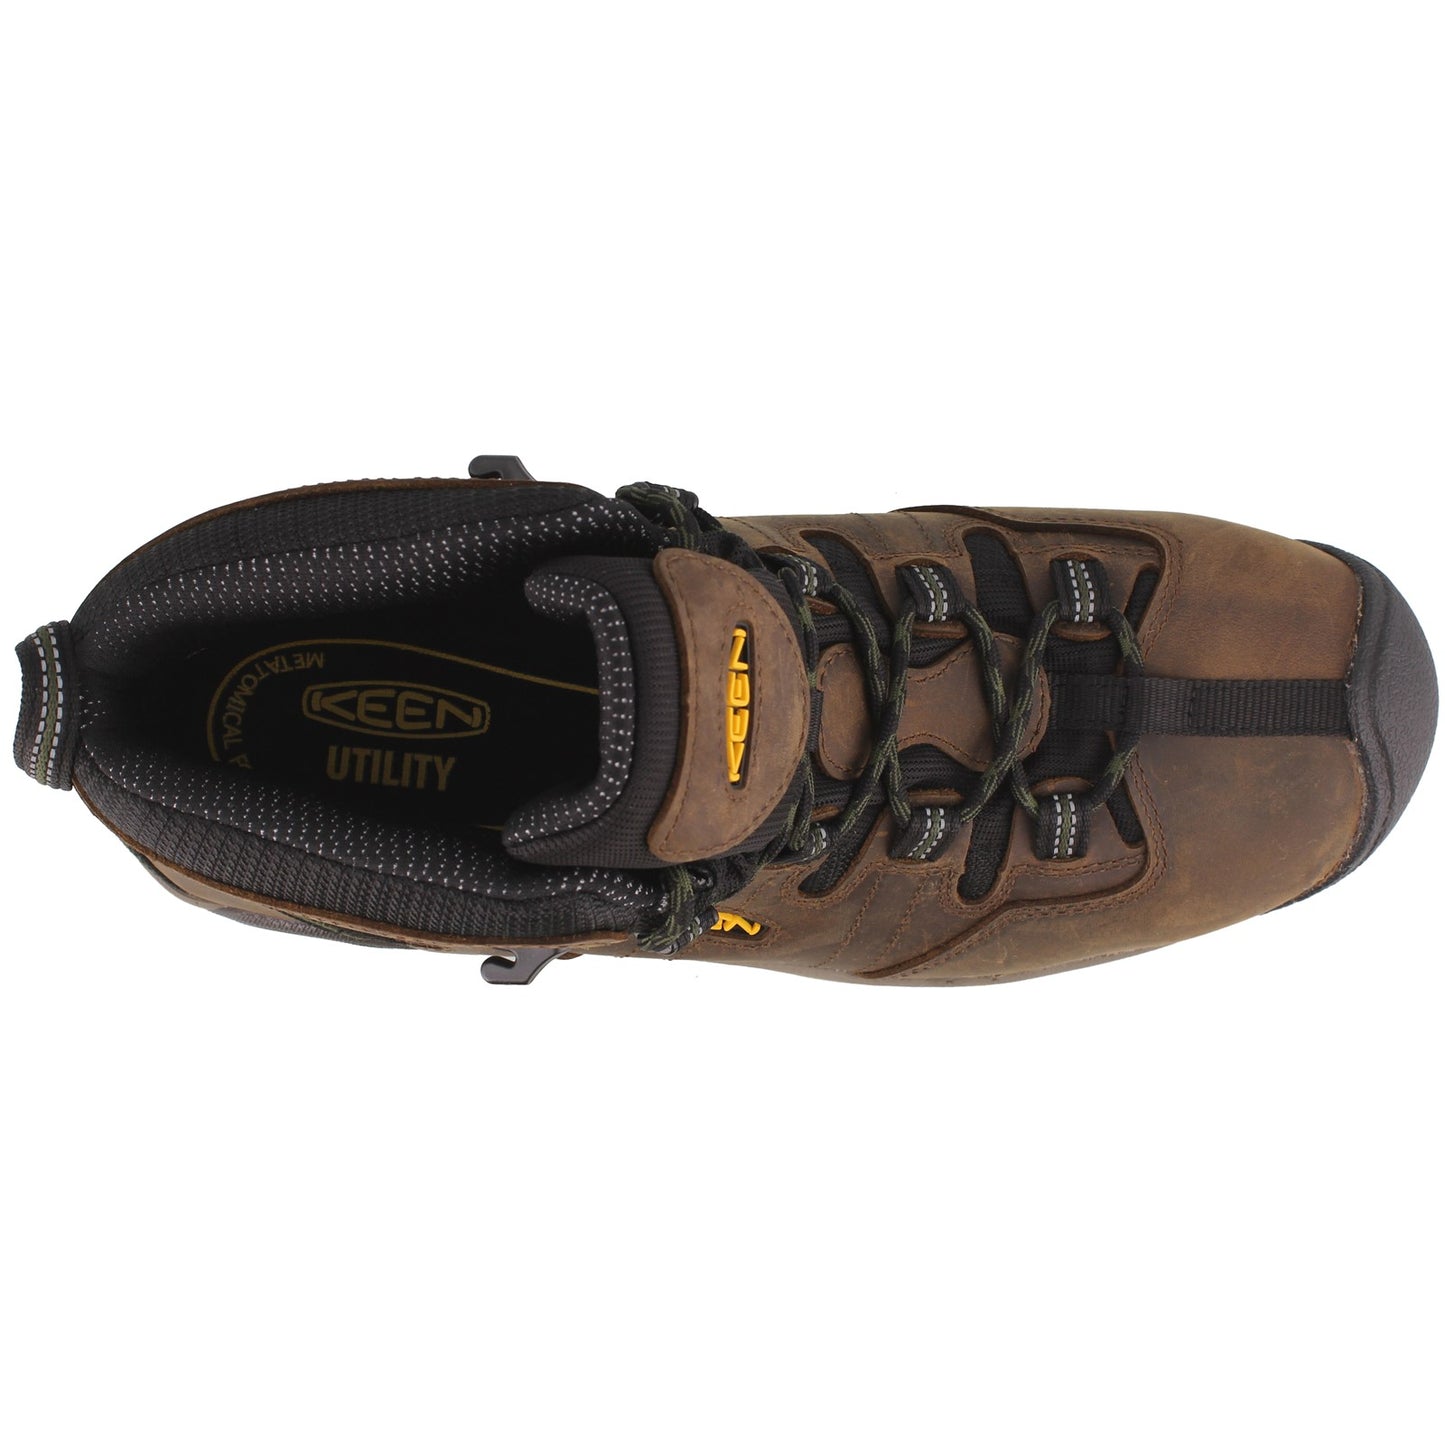 Peltz Shoes  Men's Keen Detroit XT Mid Steel Toe Waterproof Boot BROWN 1020085